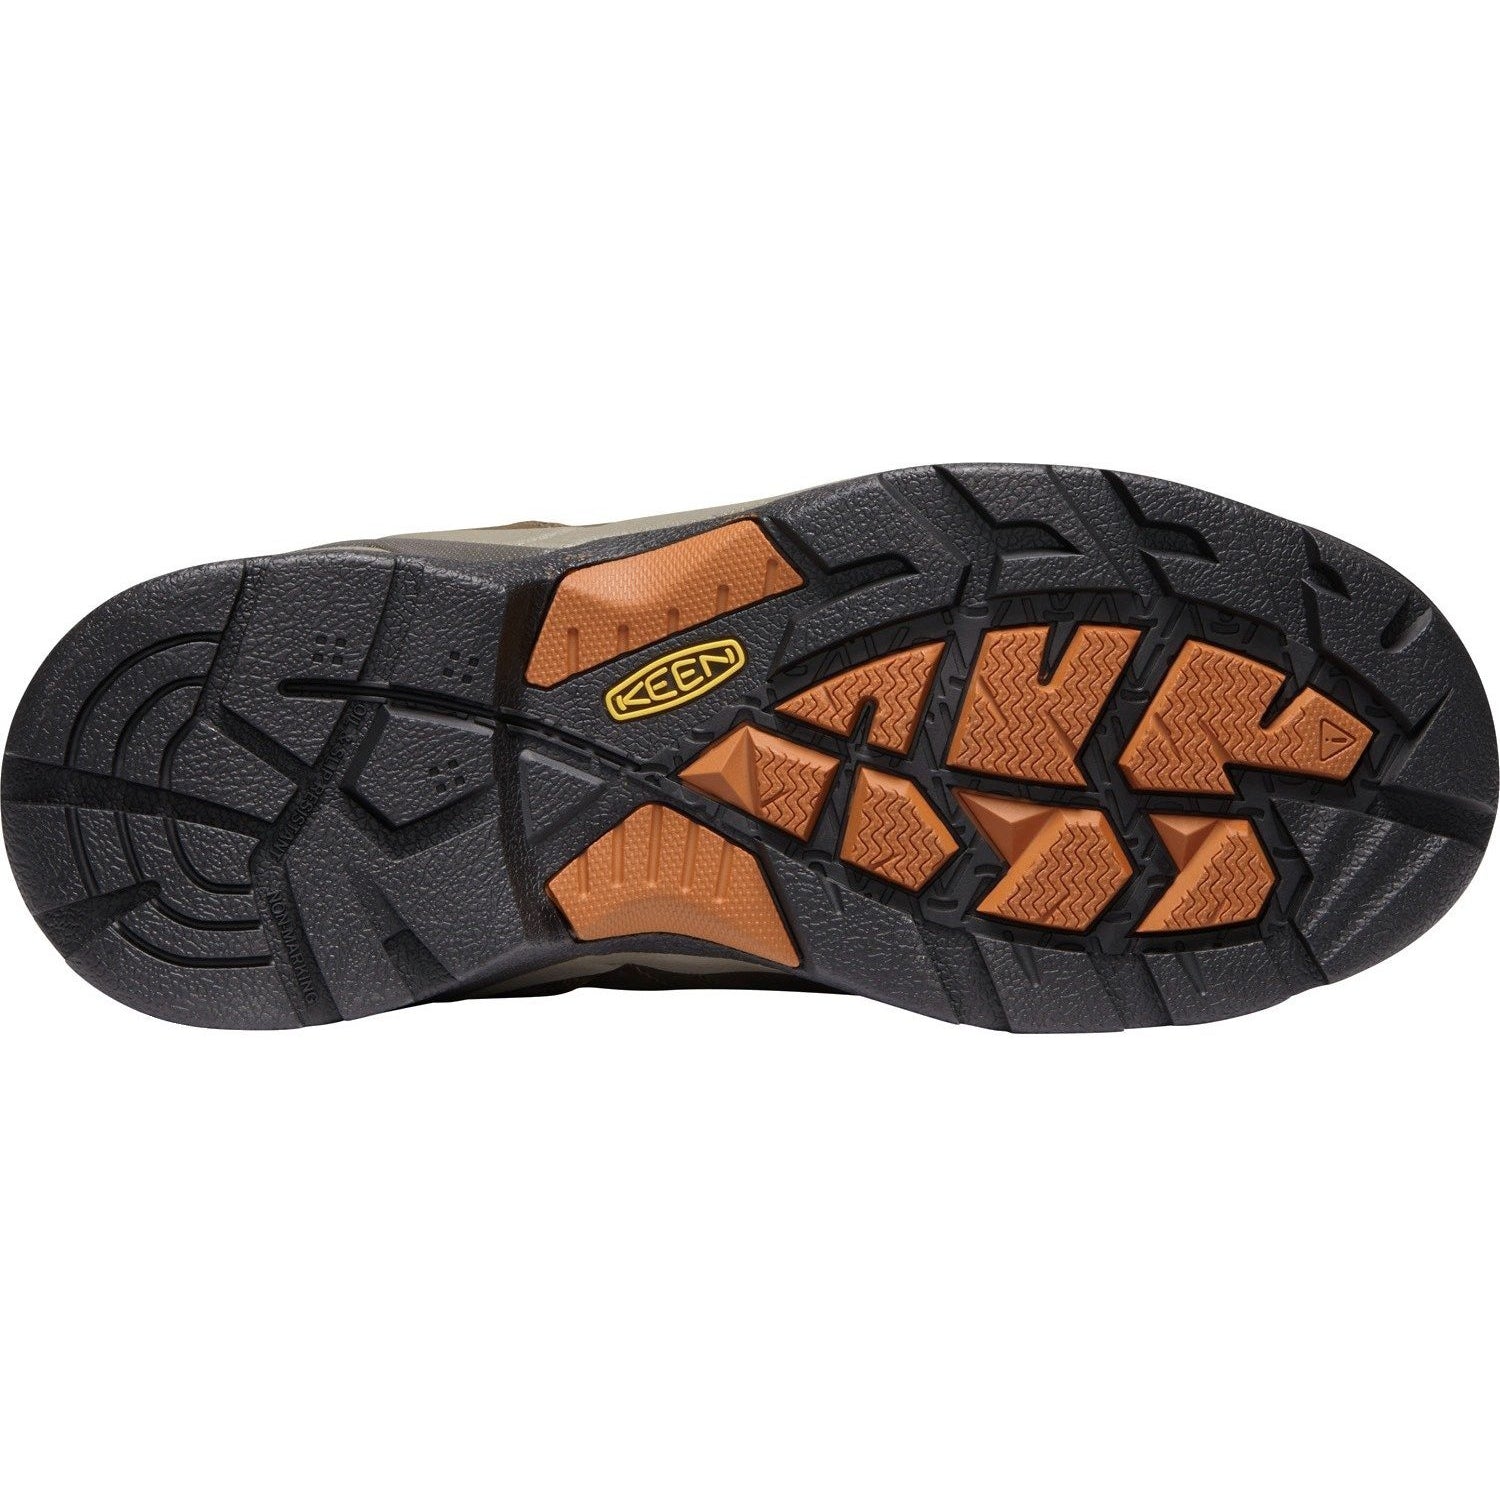 Keen Utility Men's Detroit XT WP Soft Toe Work Boot - Brown - 1020039  - Overlook Boots